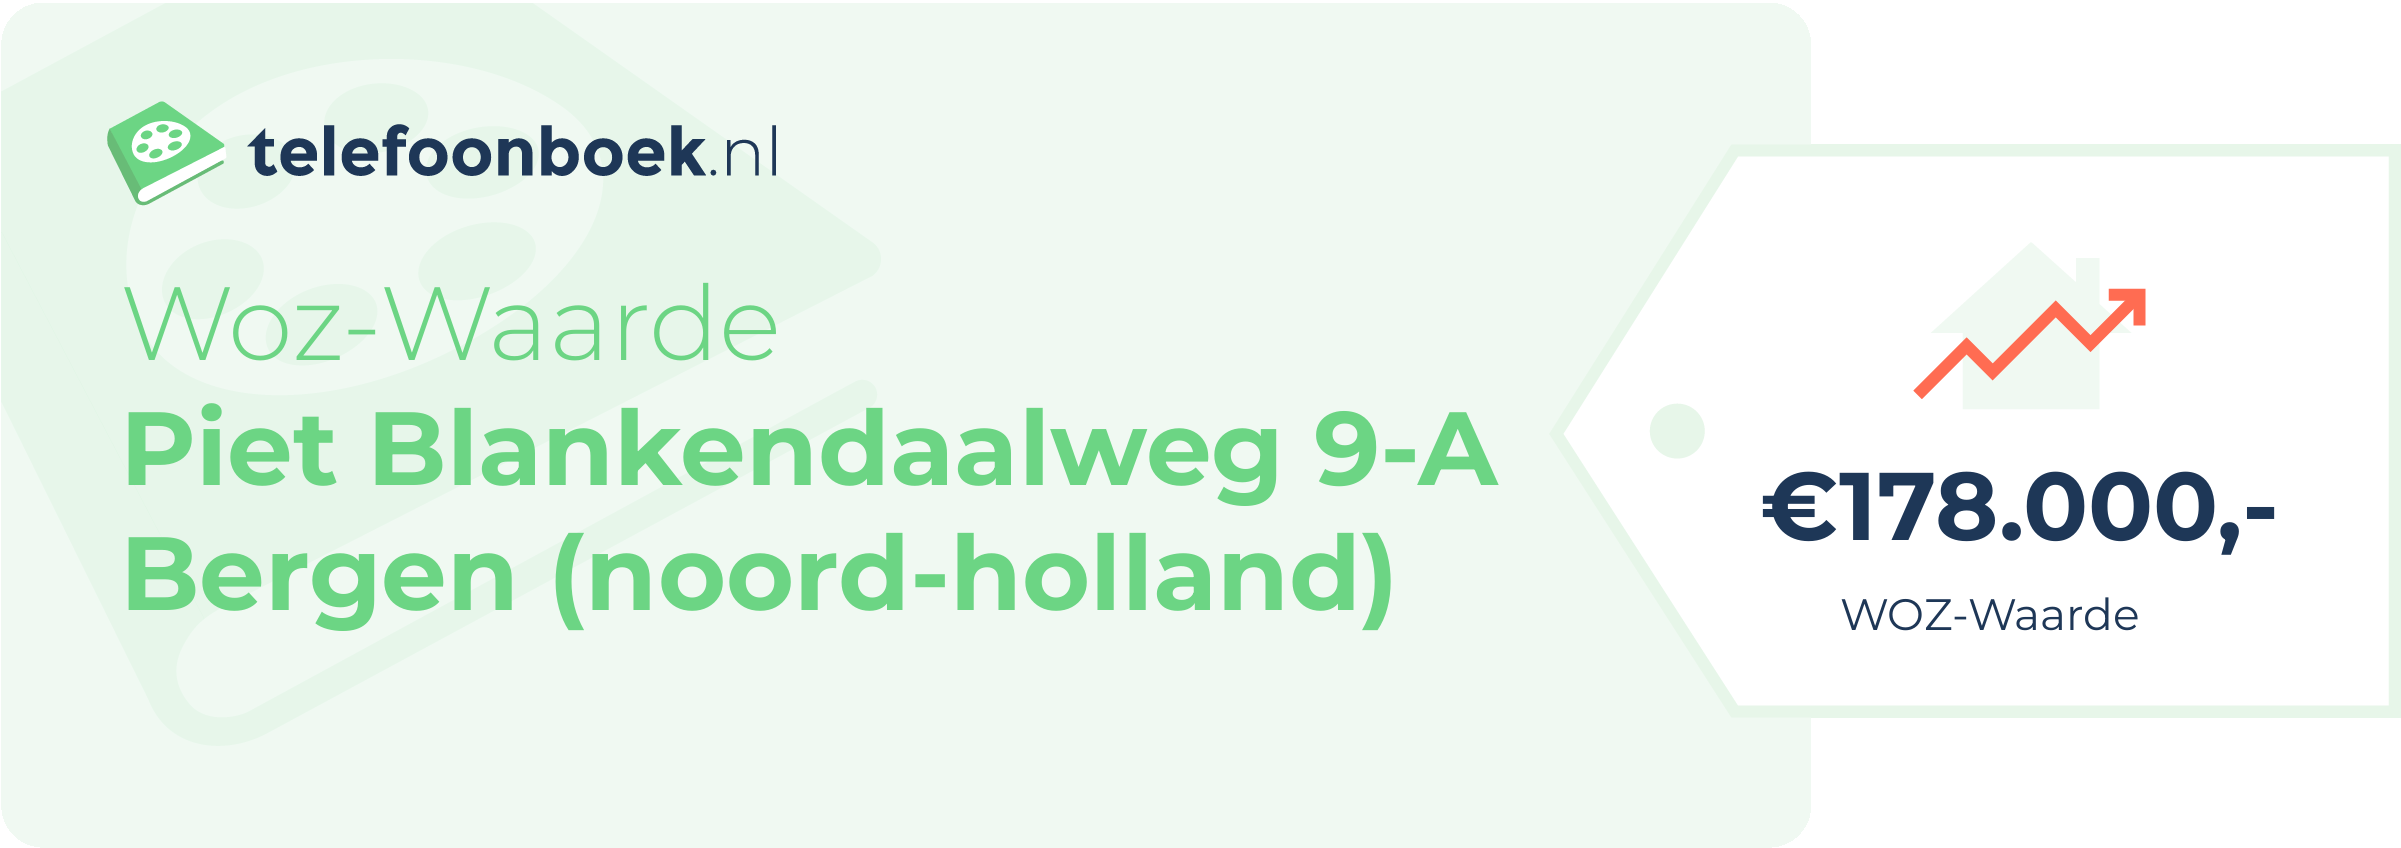 WOZ-waarde Piet Blankendaalweg 9-A Bergen (Noord-Holland)